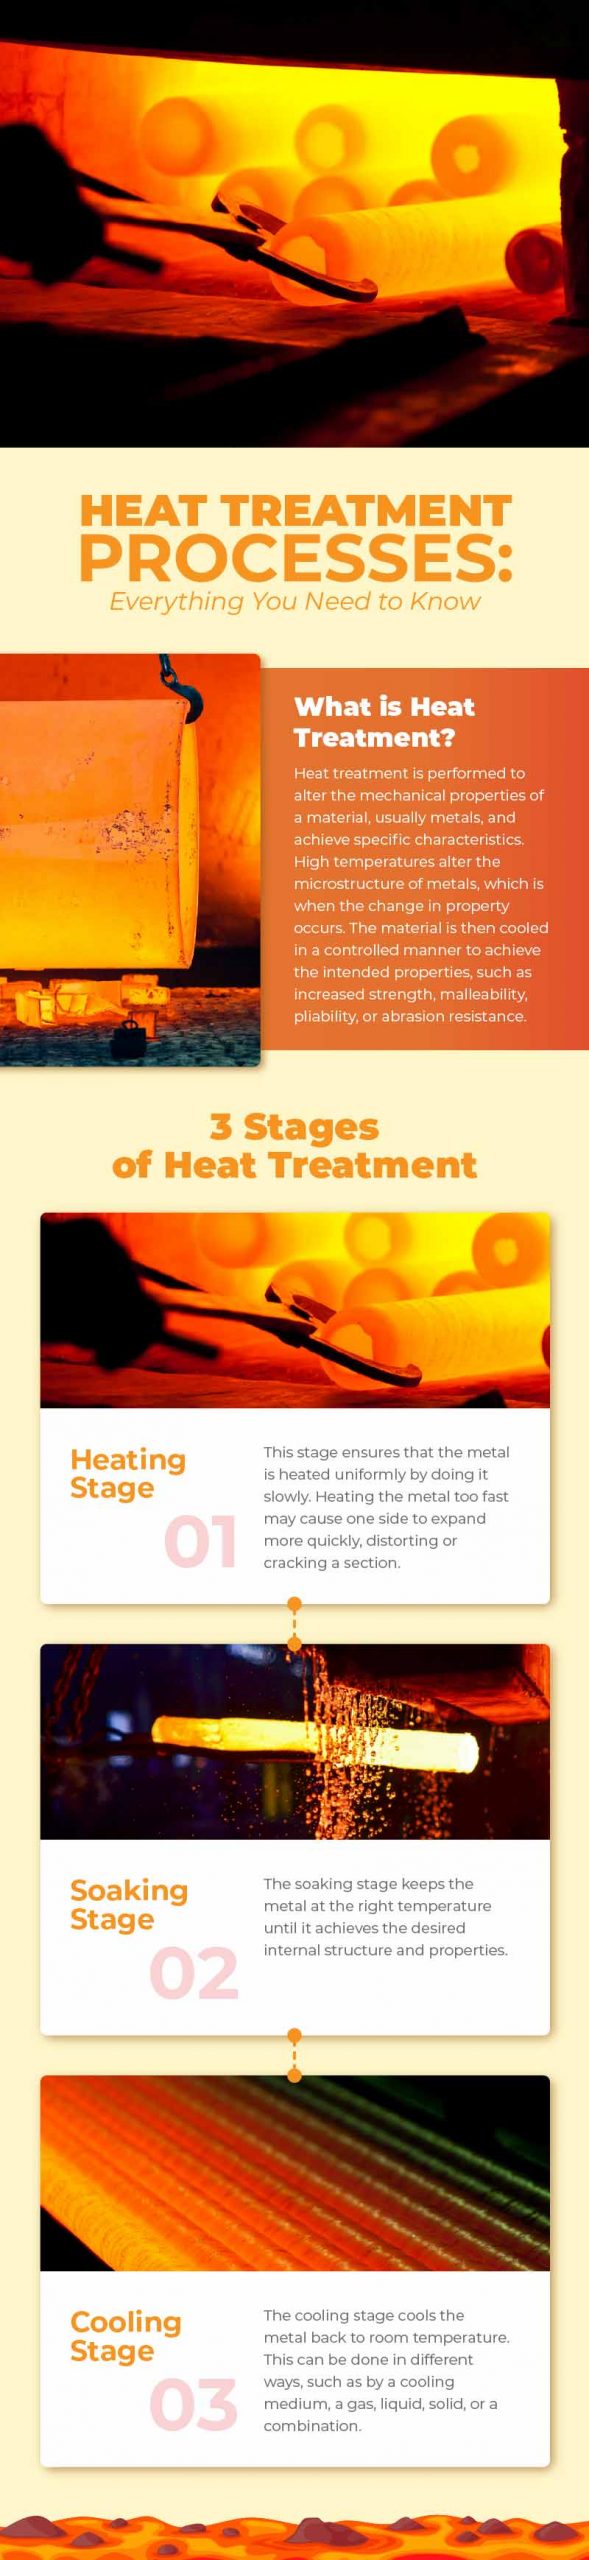 ai furnaces heat treatment processes infographic